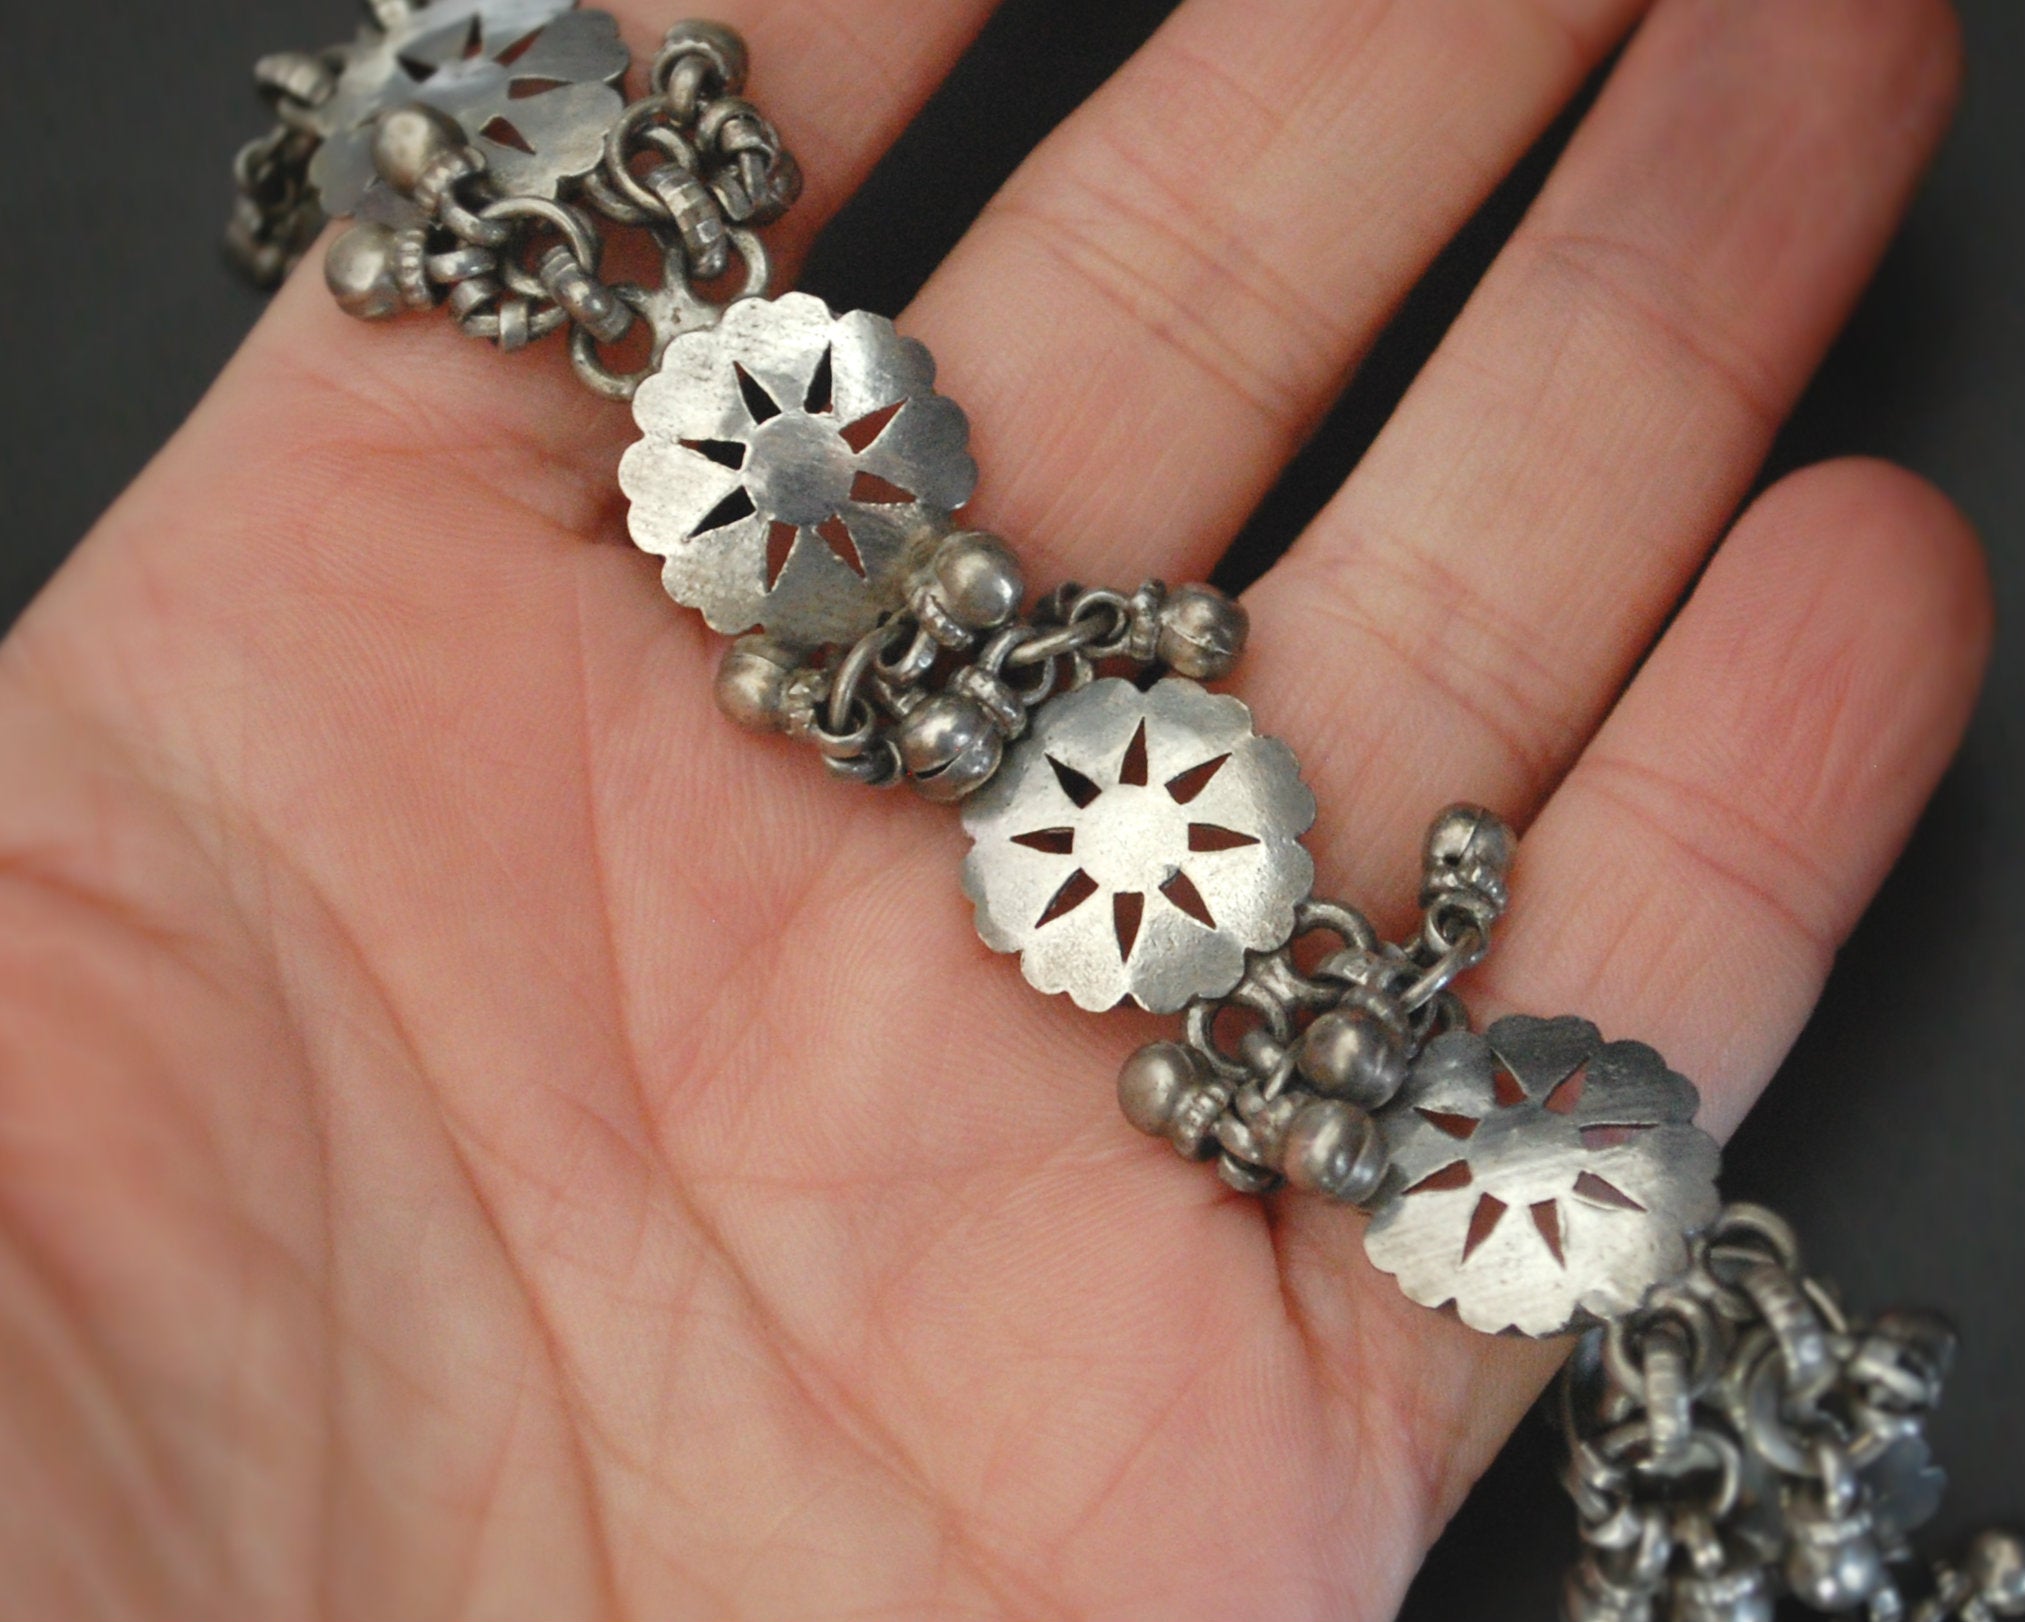 Rajasthani Silver Bracelet with Bells